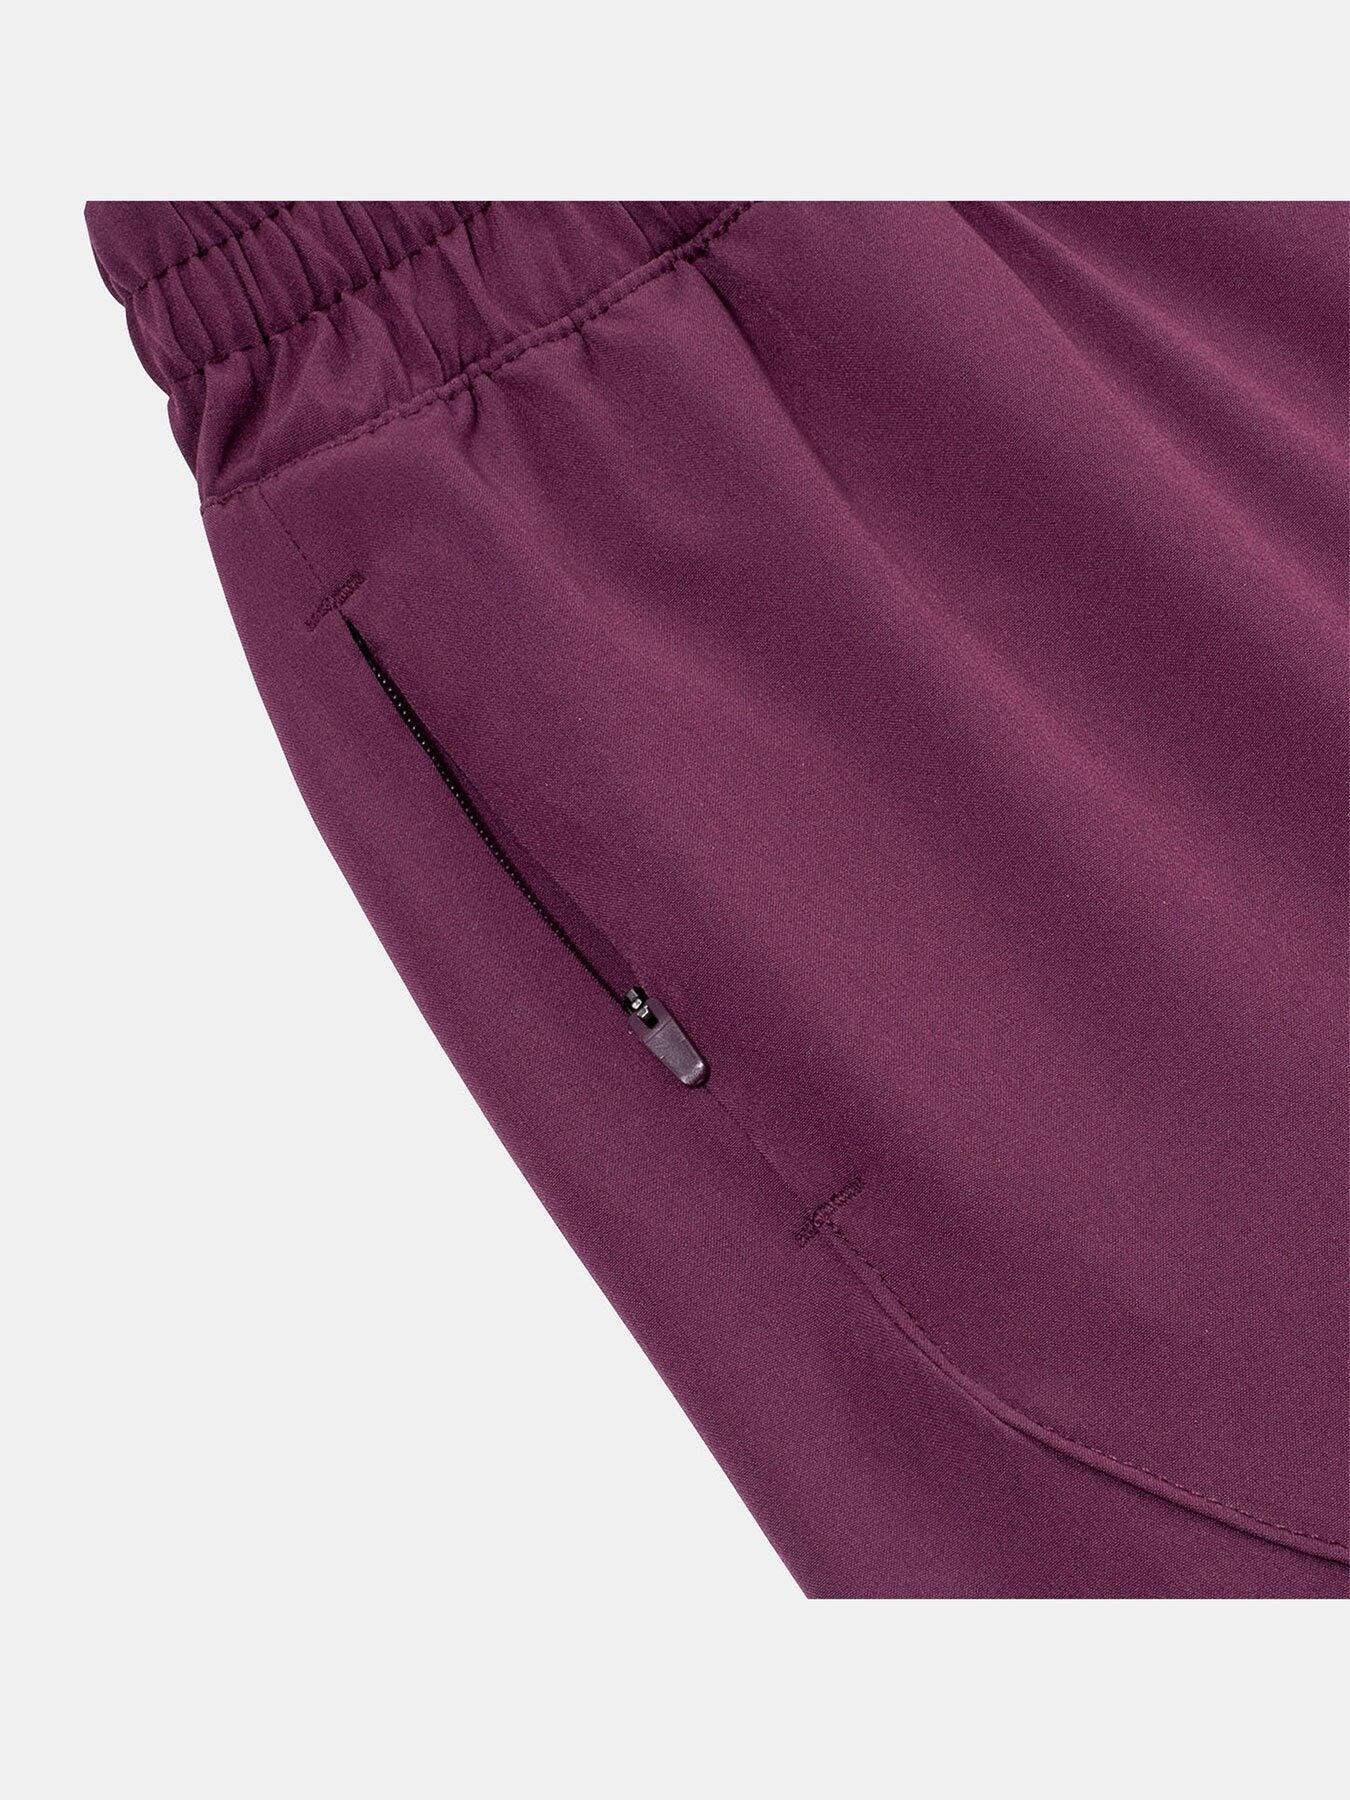 Women’s Perform 2-in-1 Shorts with Zip Pocket - Prune/Mid Grey 5/5